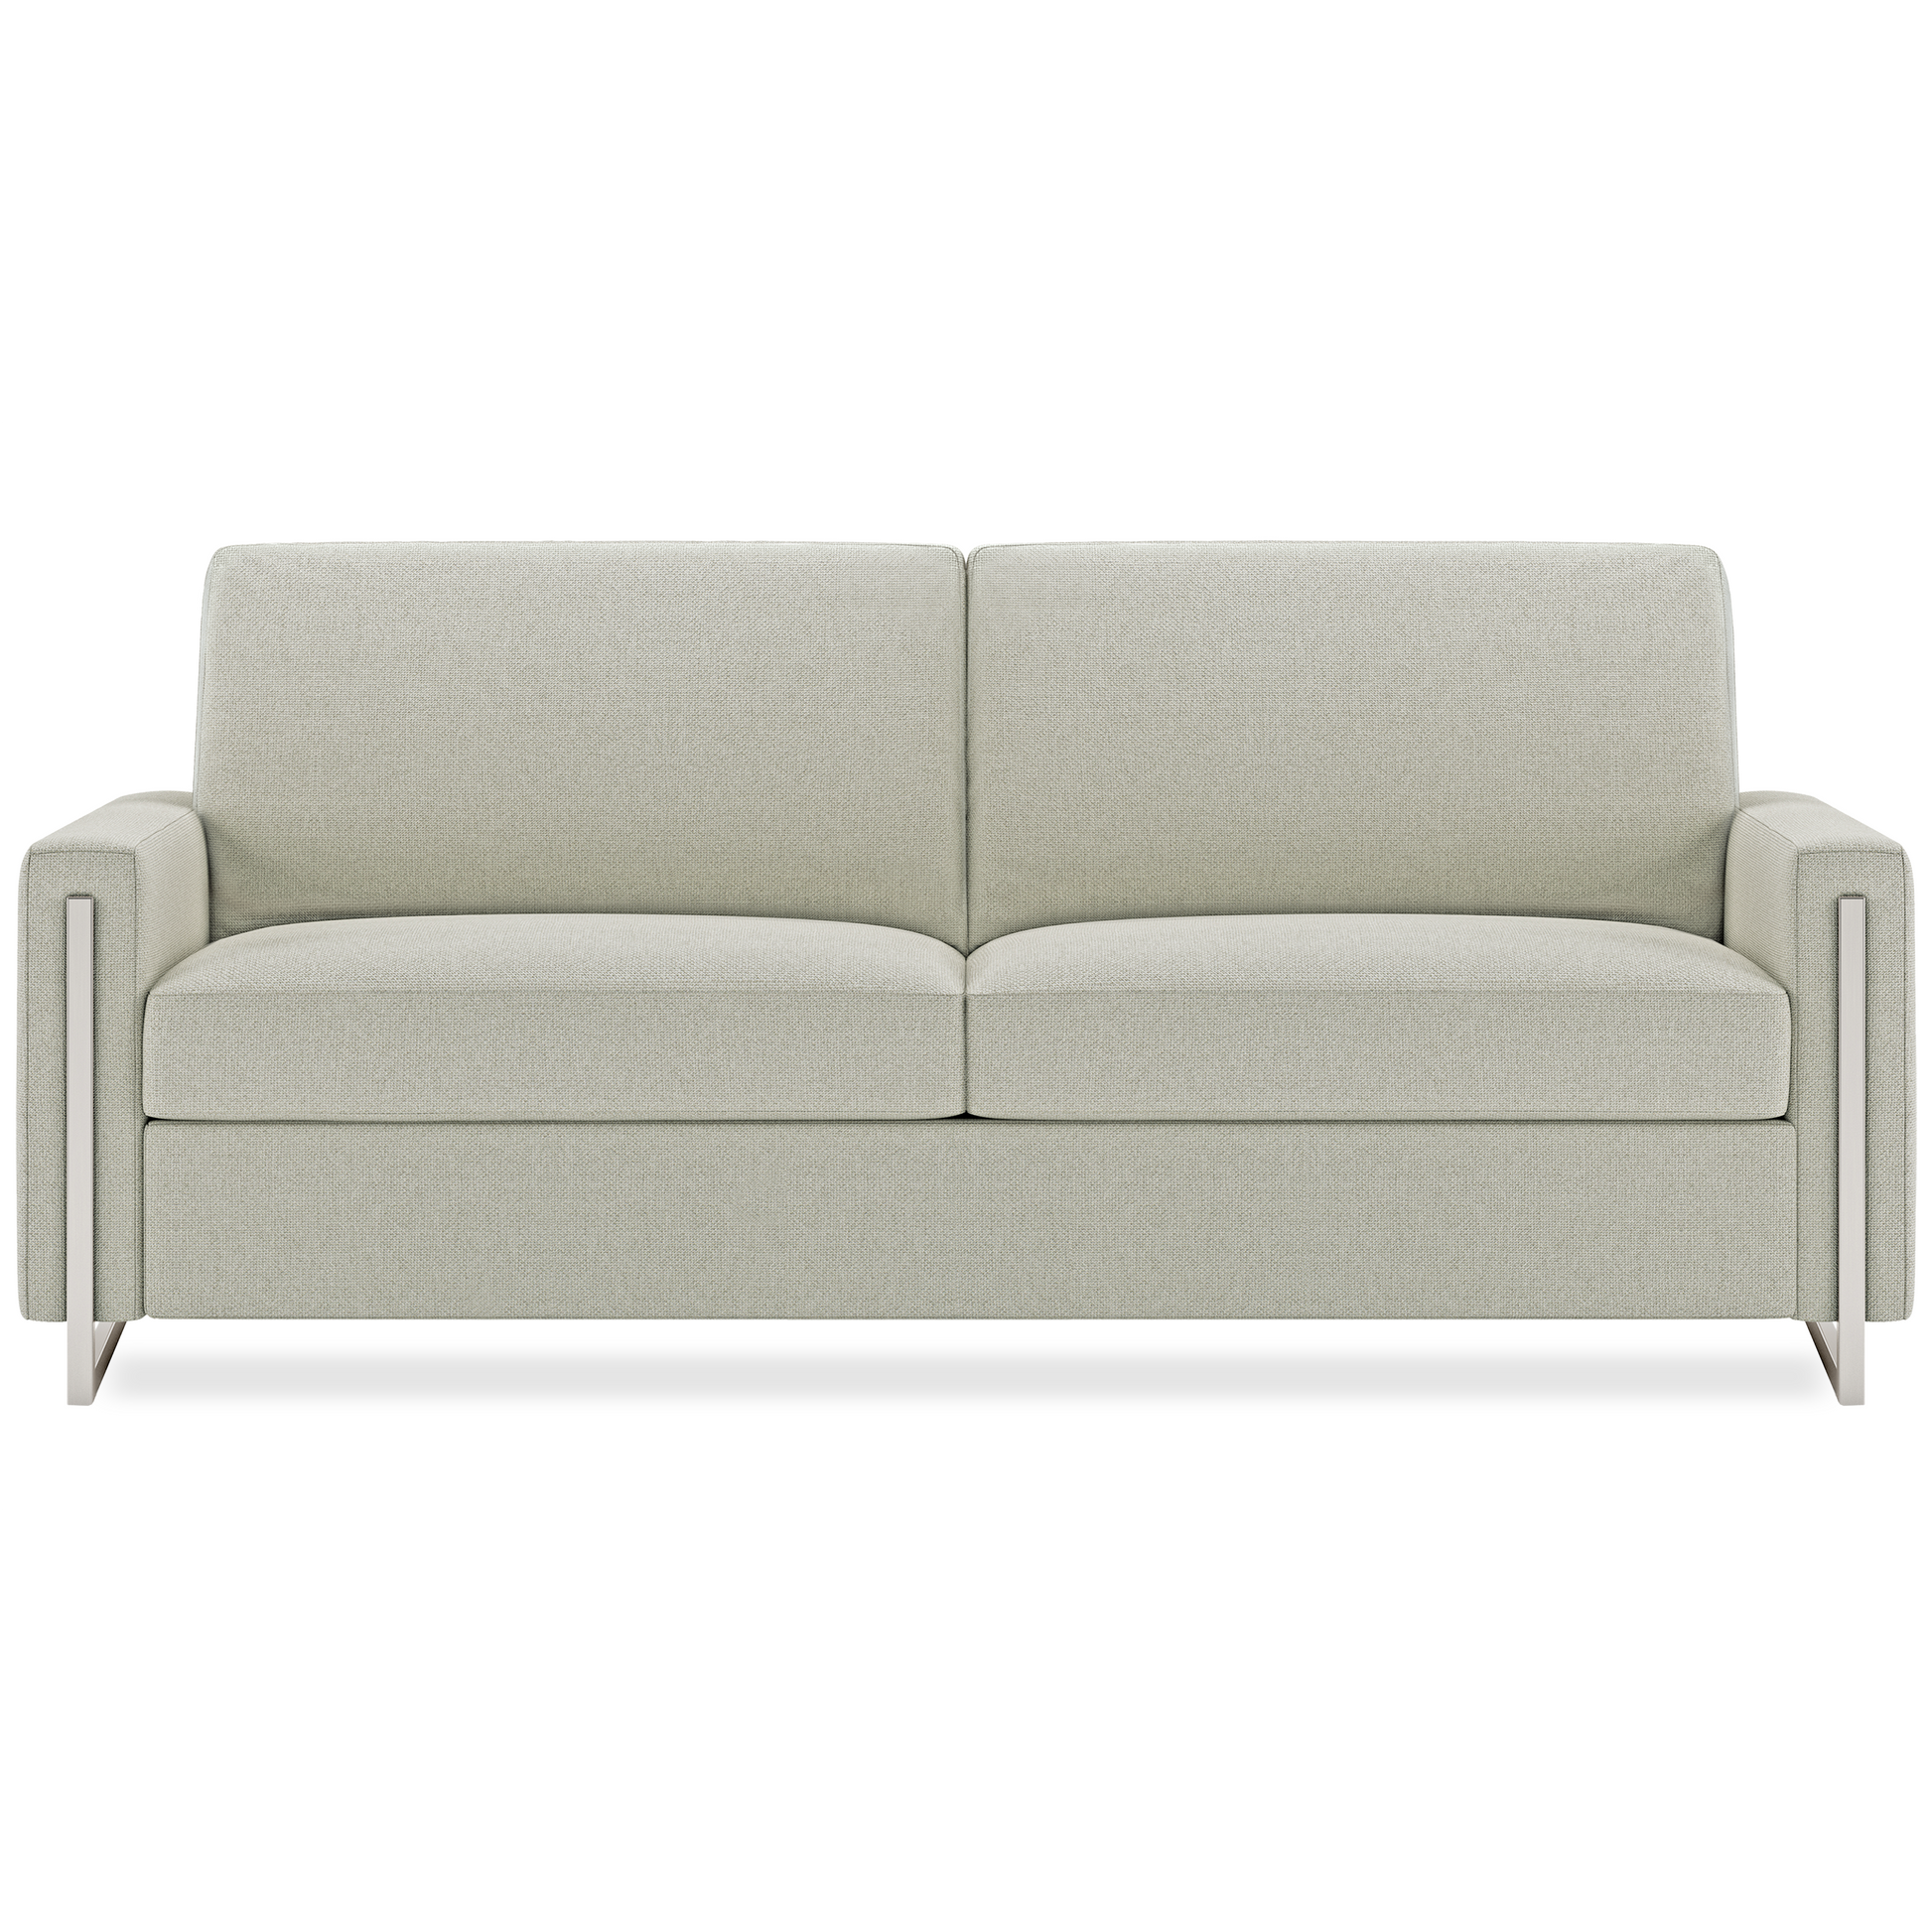 American Leather Comfort Sleeper - Sulley - Best Sofa Sleeper